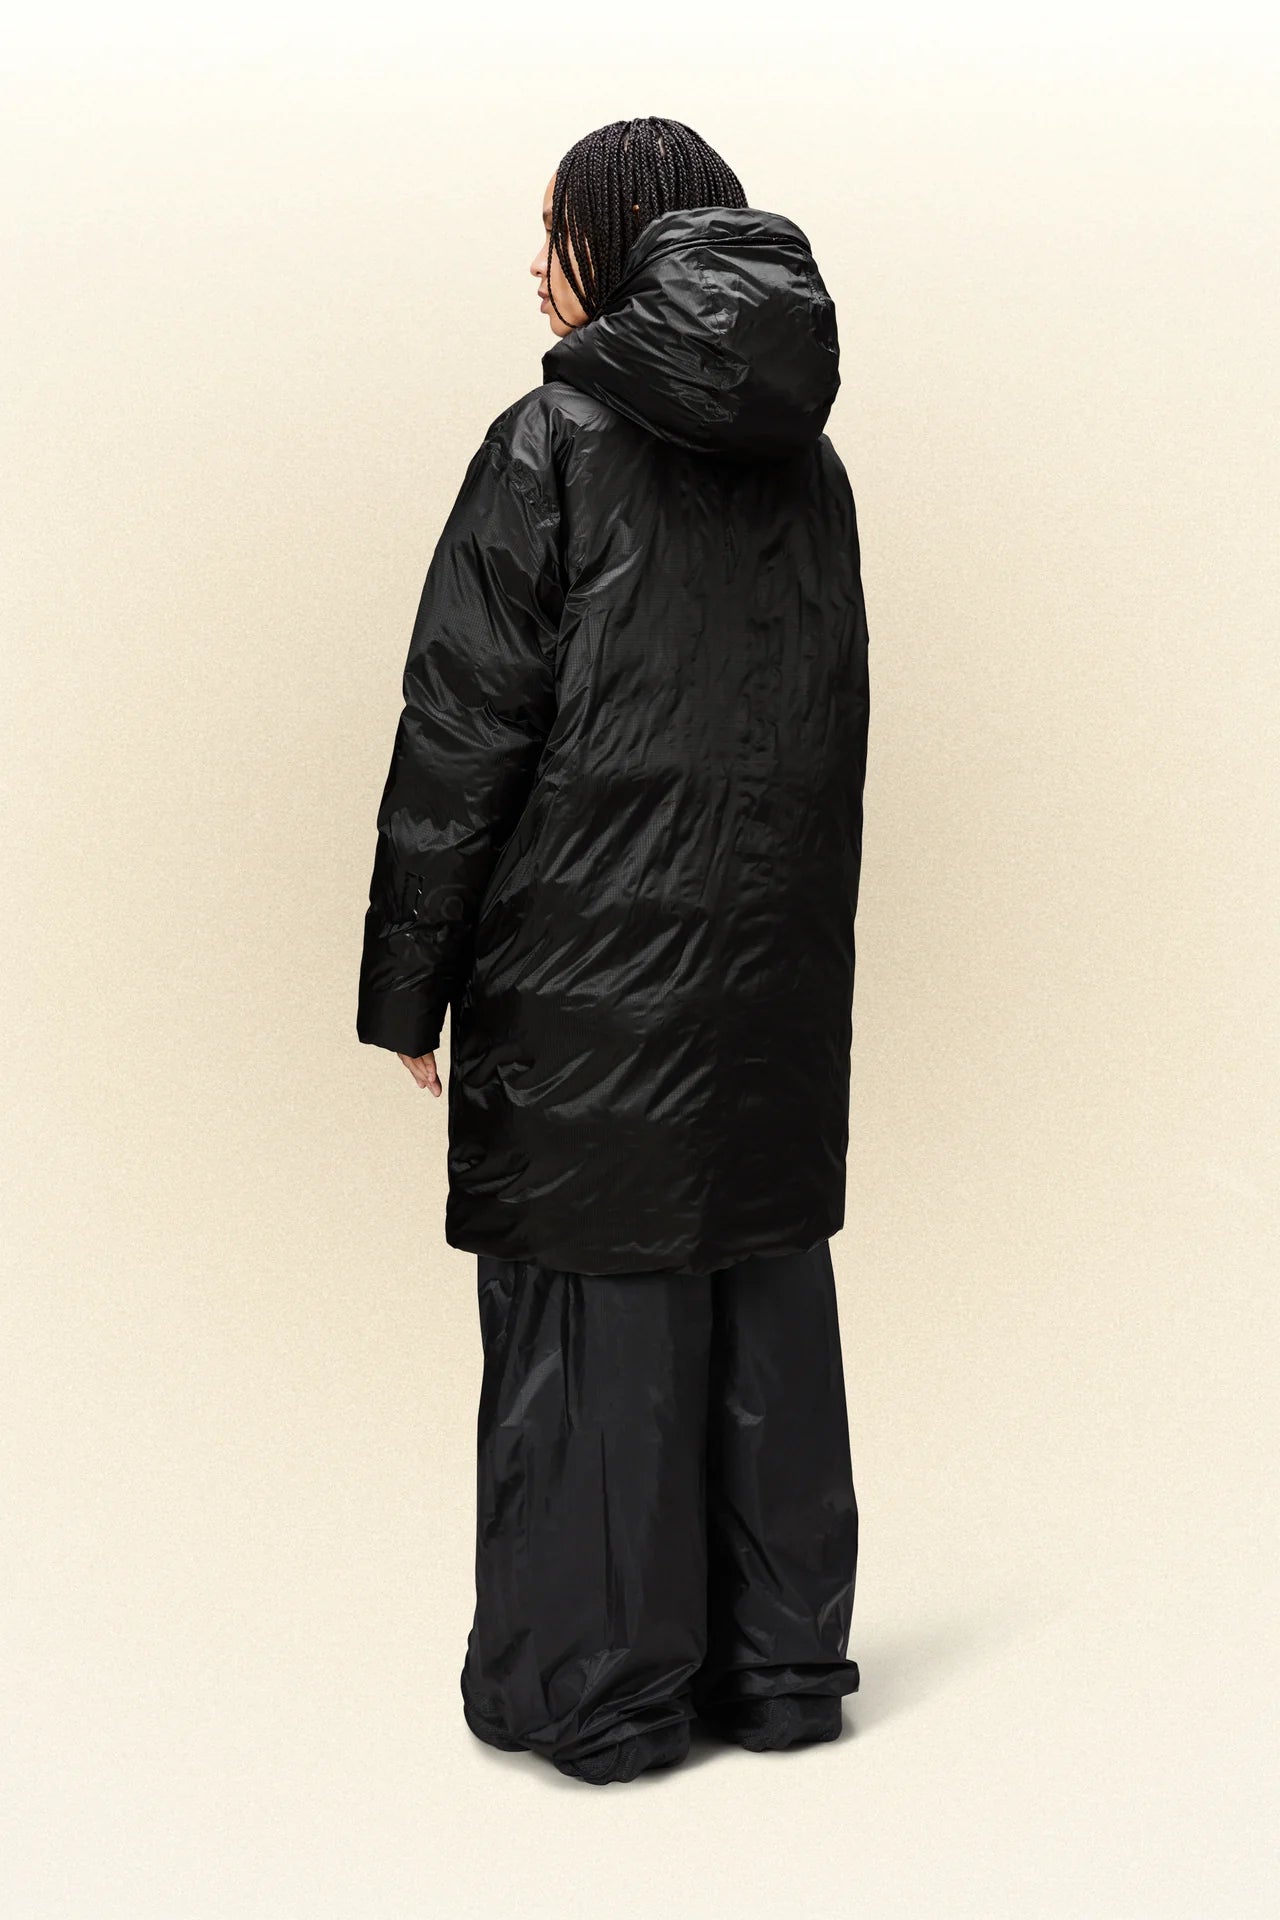 The back of a woman wearing a Rains Kevo Long Puffer - Black jacket.